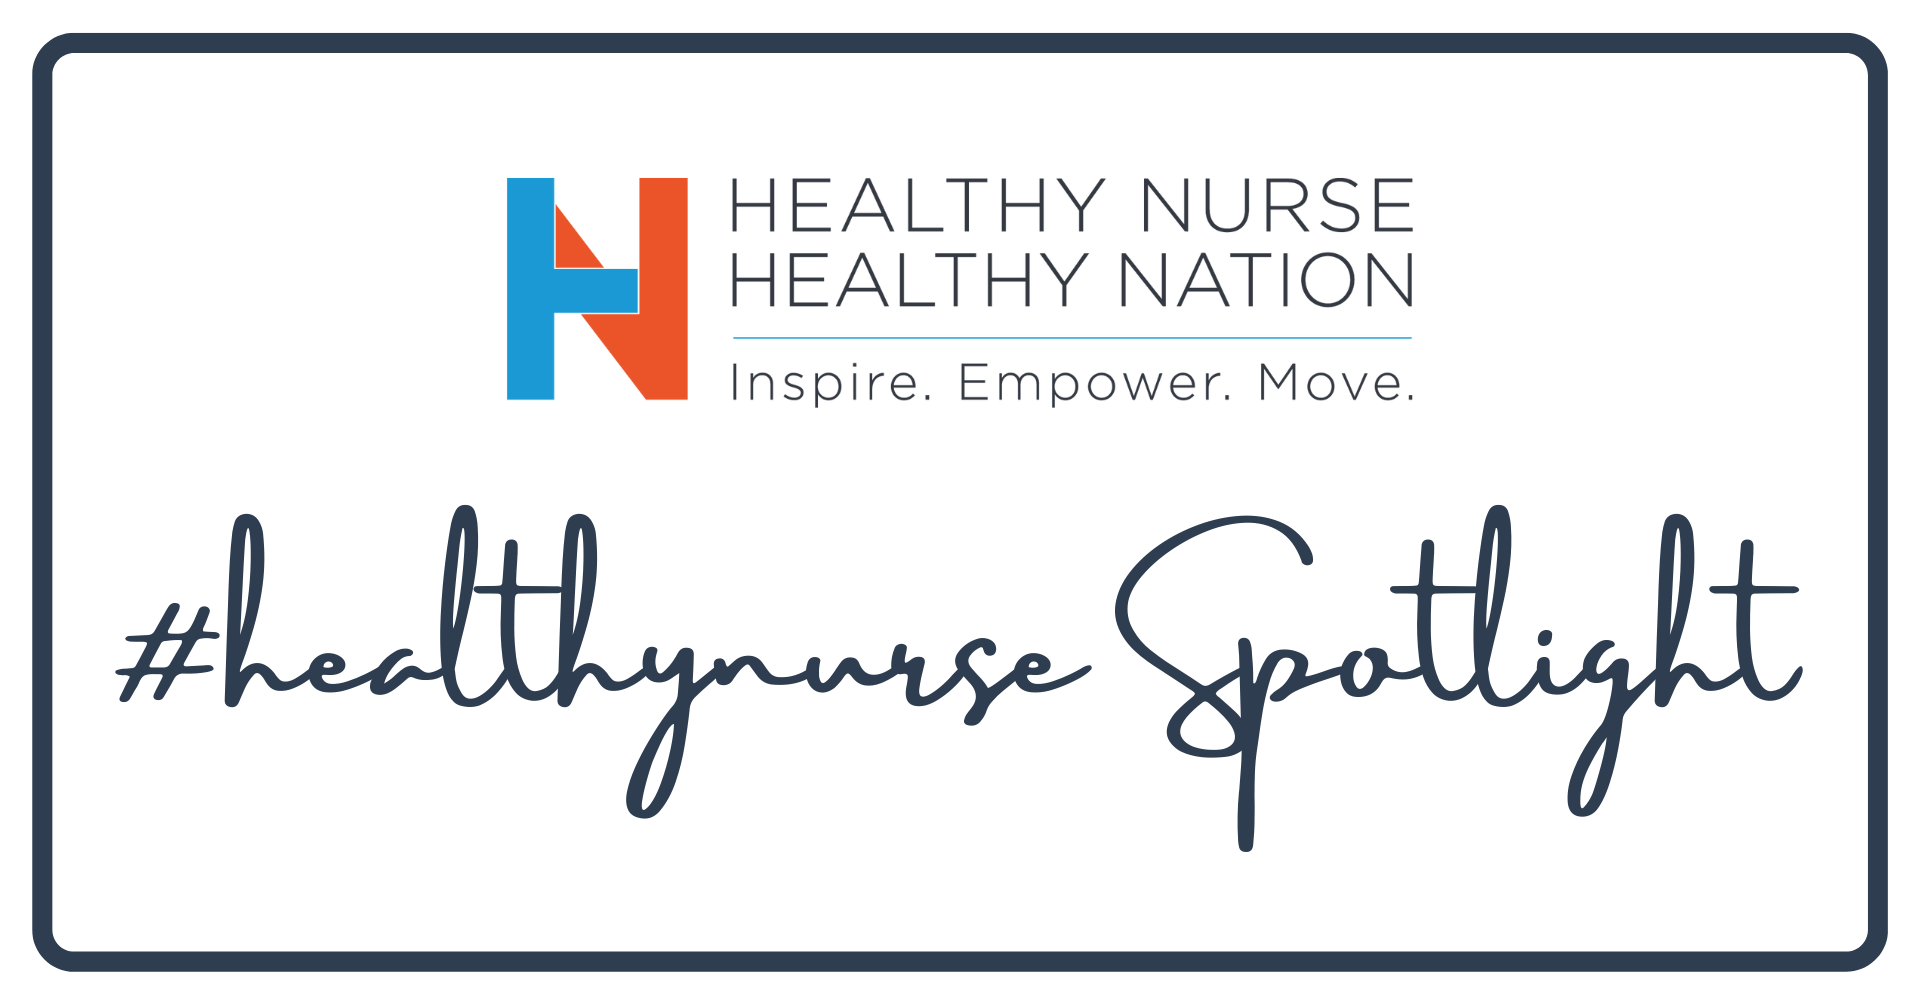 Healthy Nurse, Healthy Nation™ - #healthynurse Spotlight Series - Ernest Grant, PhD, RN, FAAN 4253